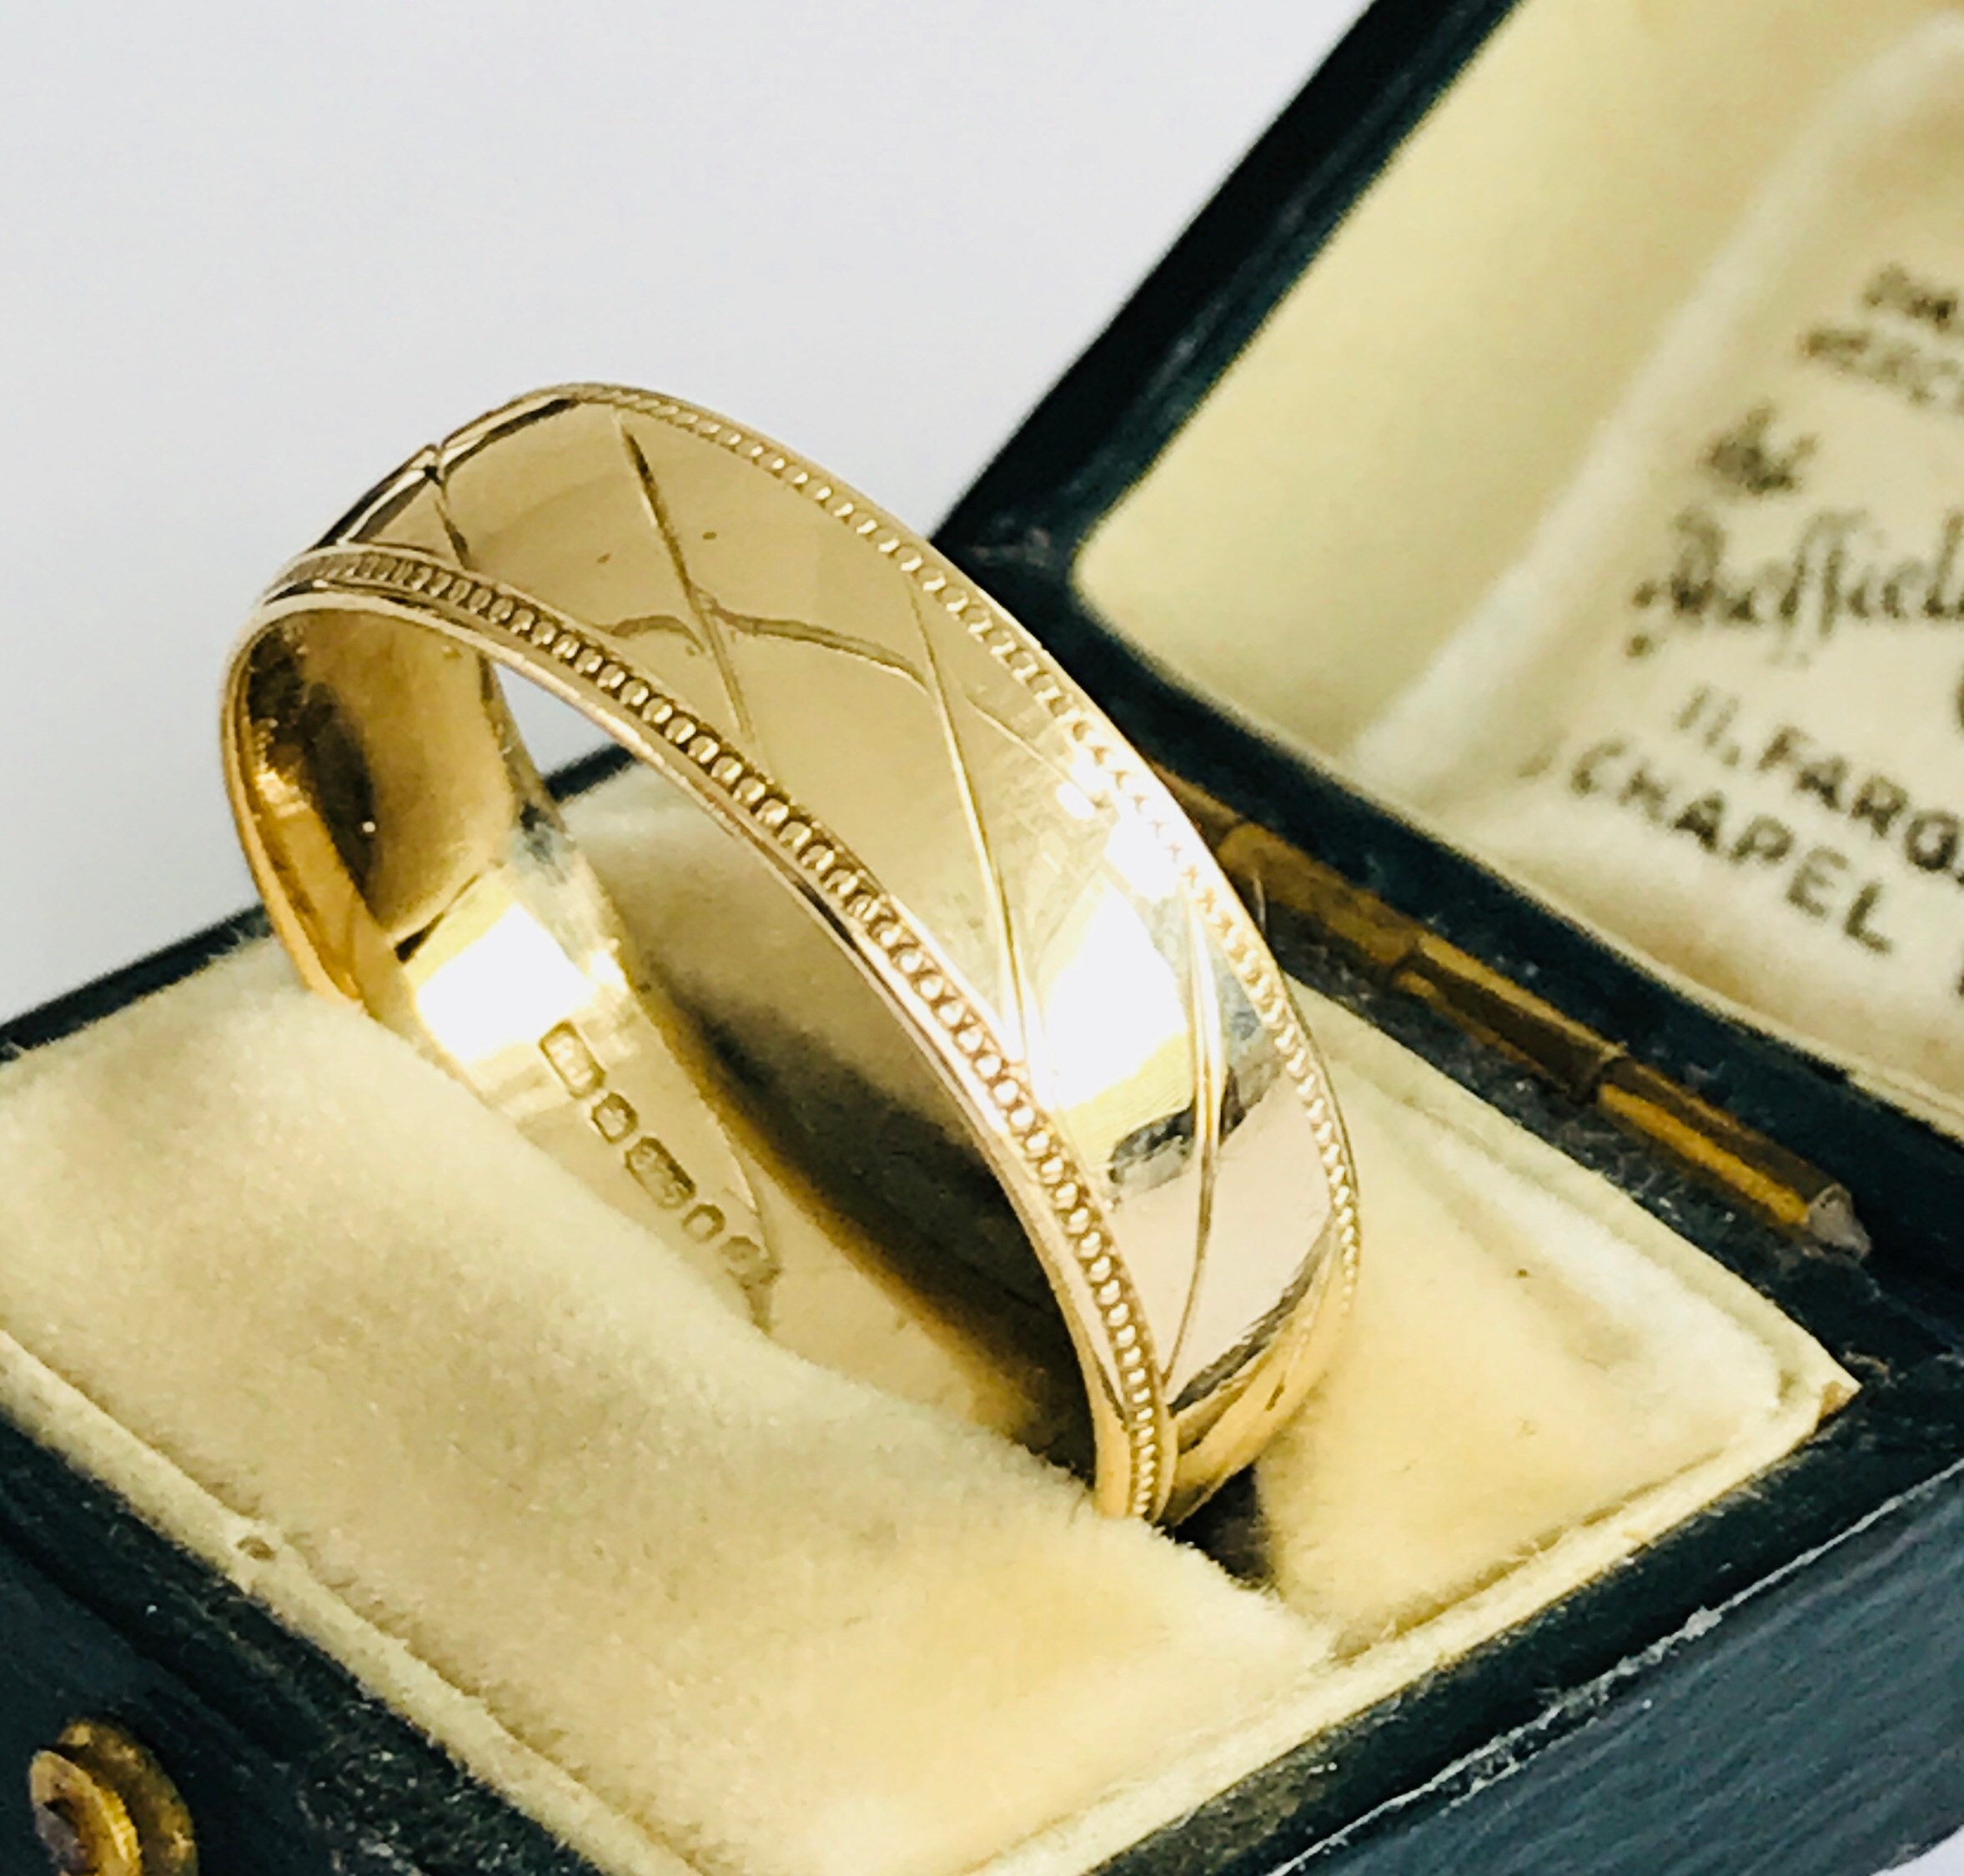 Stunning vintage 9ct yellow gold Men's wedding ring - hallmarked London ...